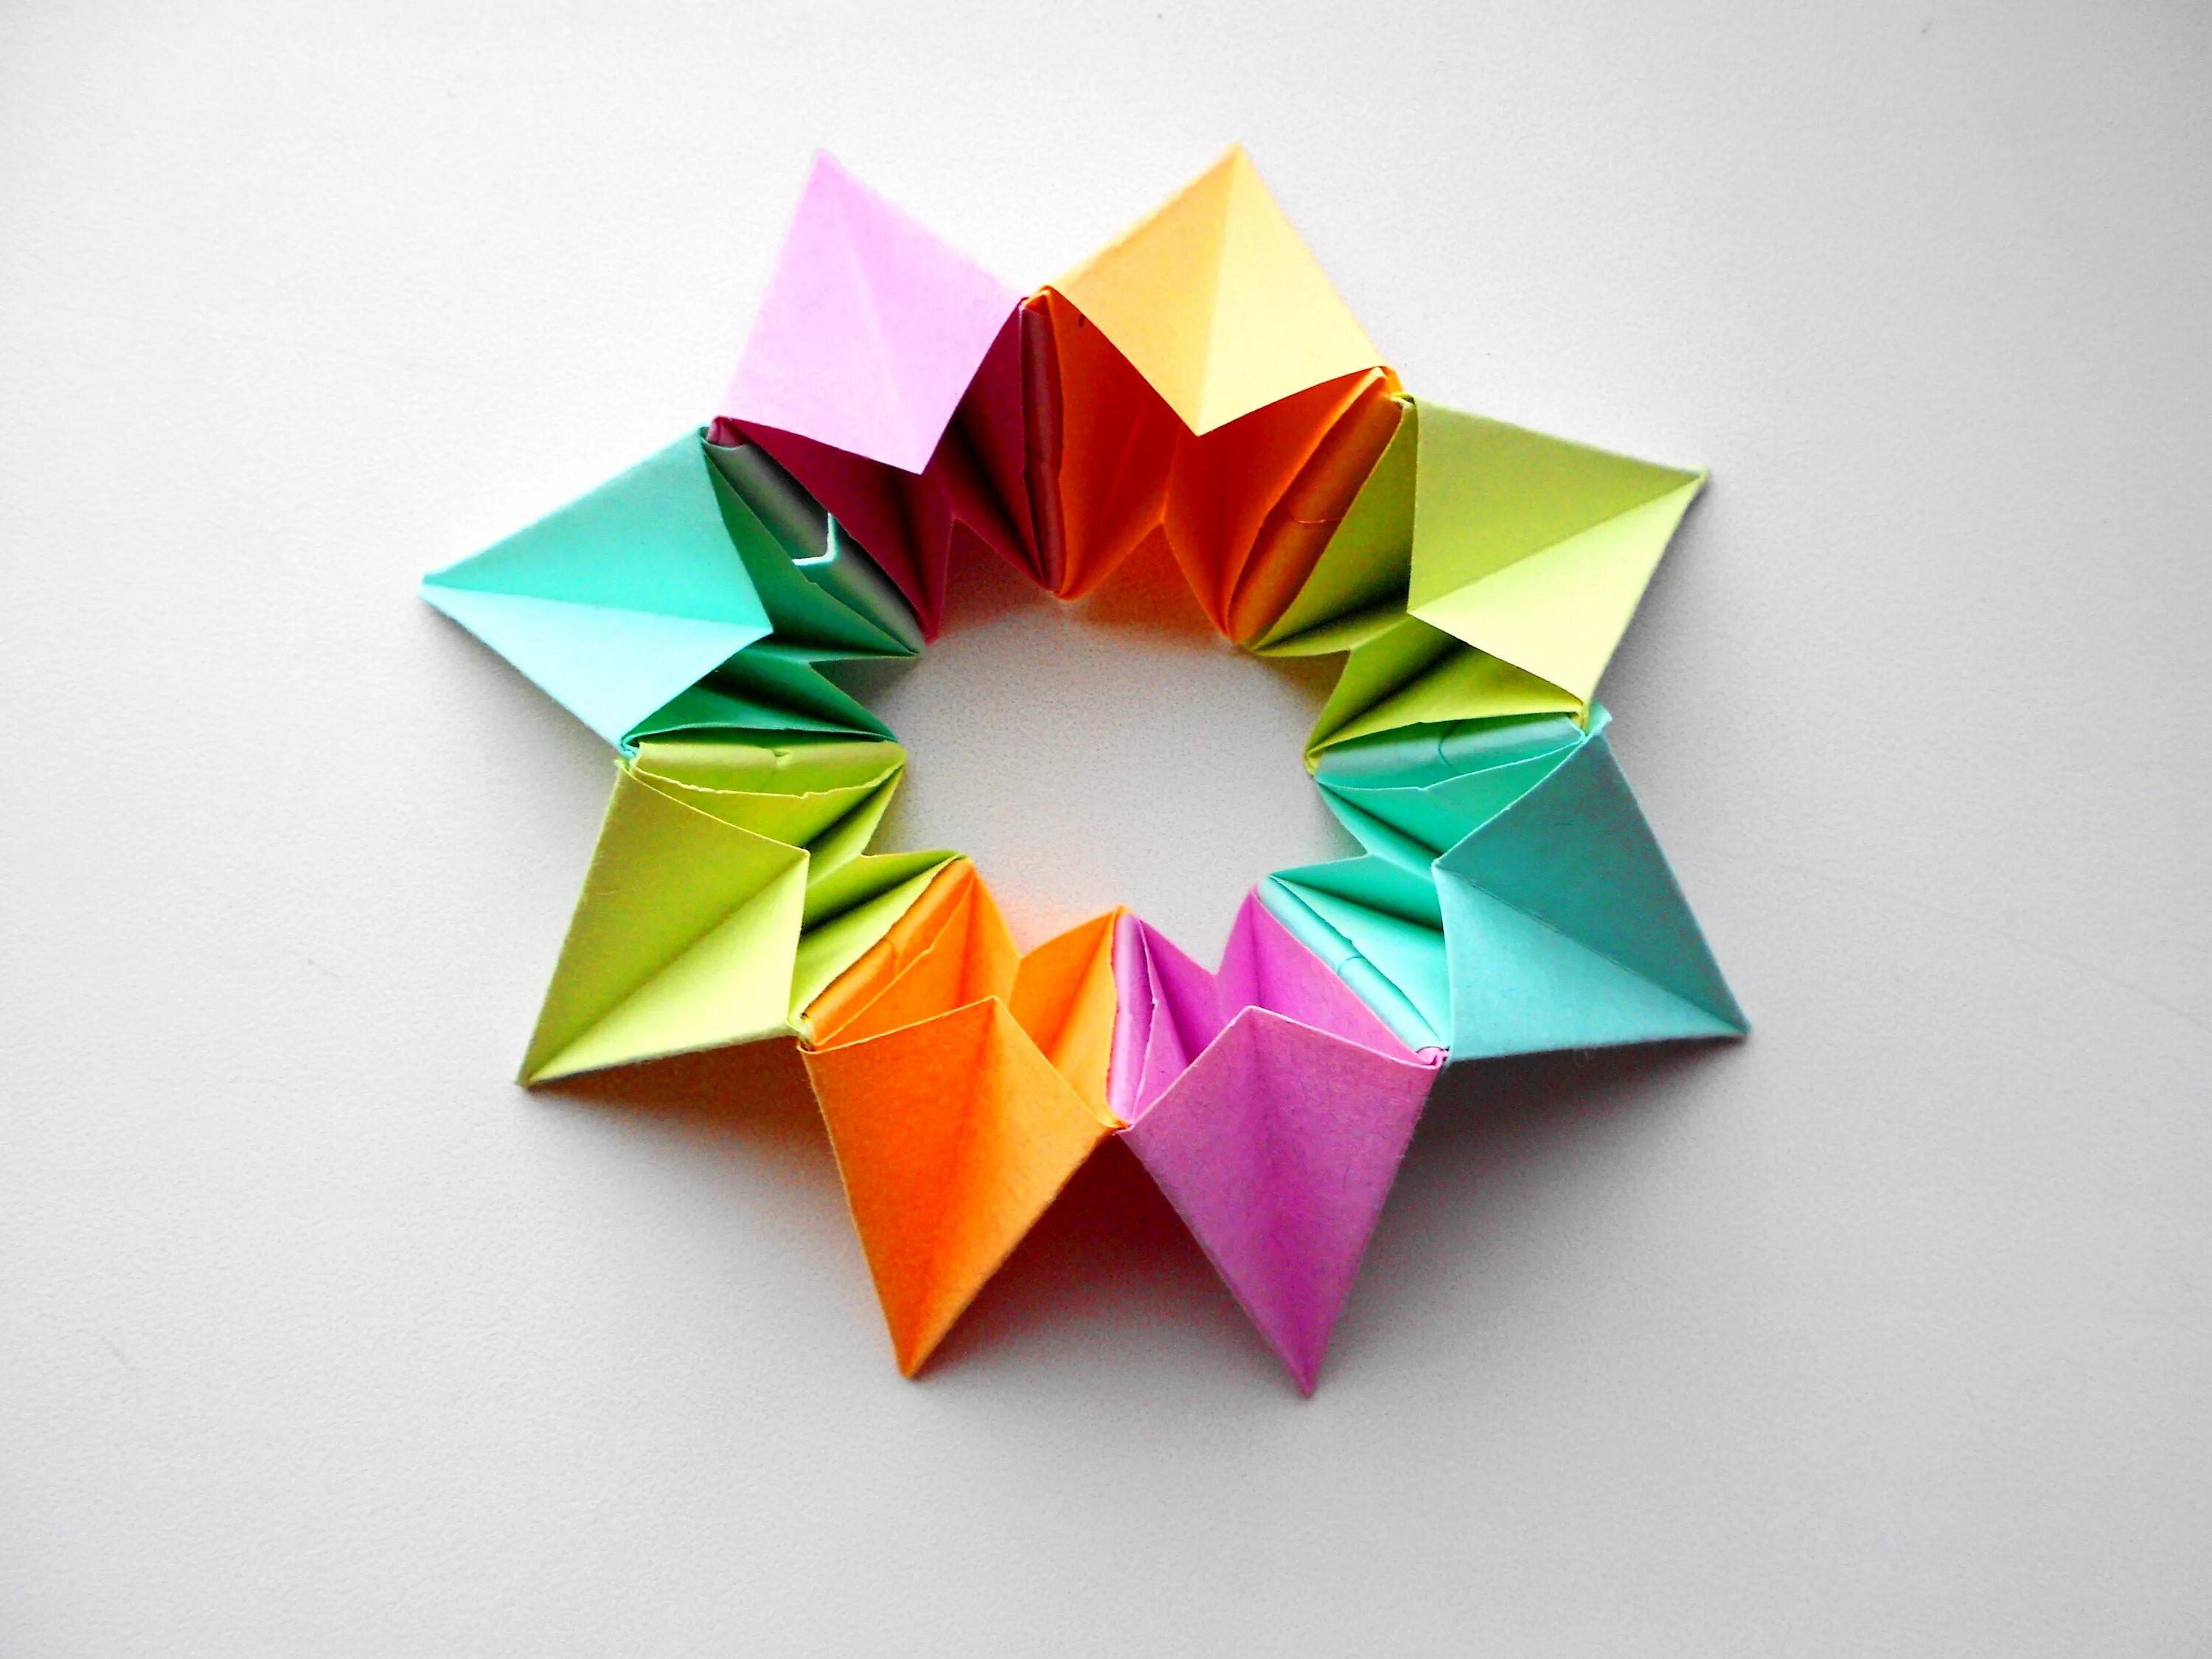 Включи оригами сделать. Оригами. Оригами игрушки. Классные оригами. Оригами из бумаги.